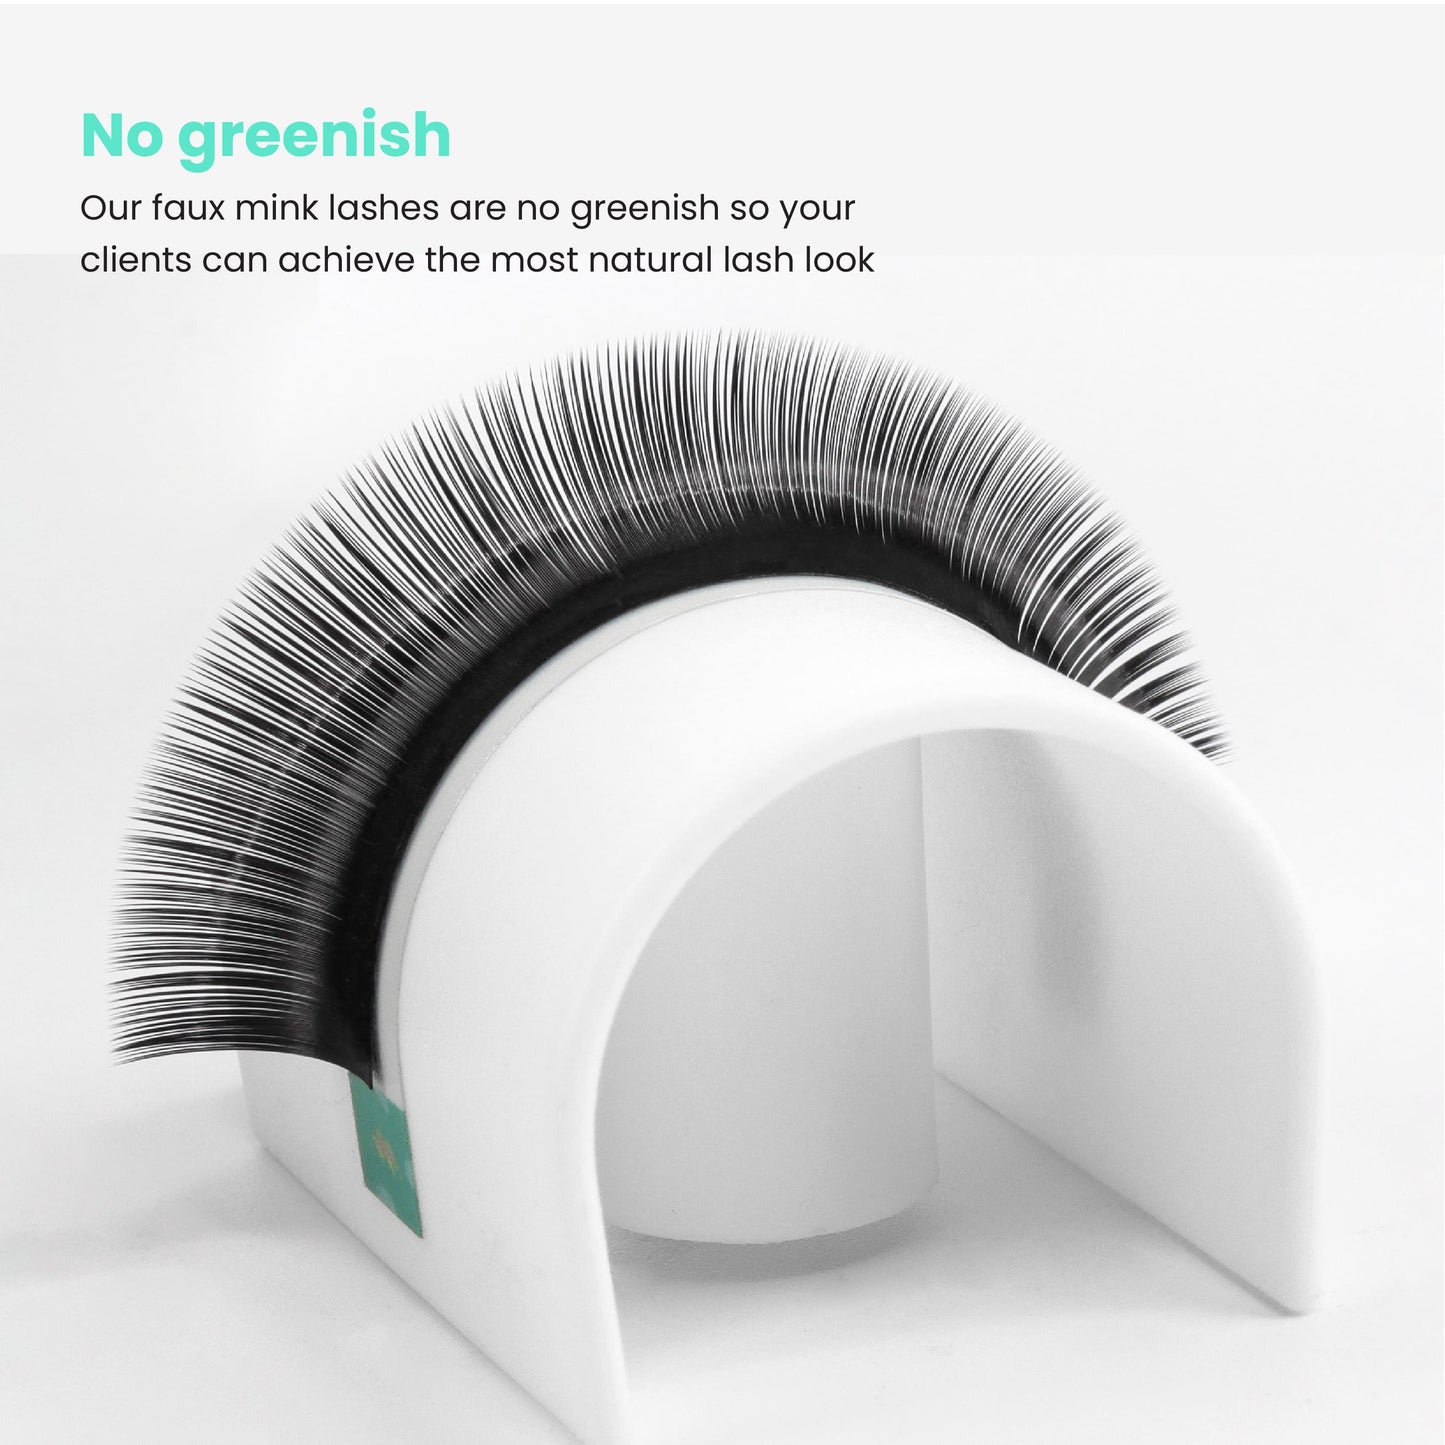 Premium Mink - Volume Lashes no greenish - wholesale Faux lash extension manufacturer & retailer